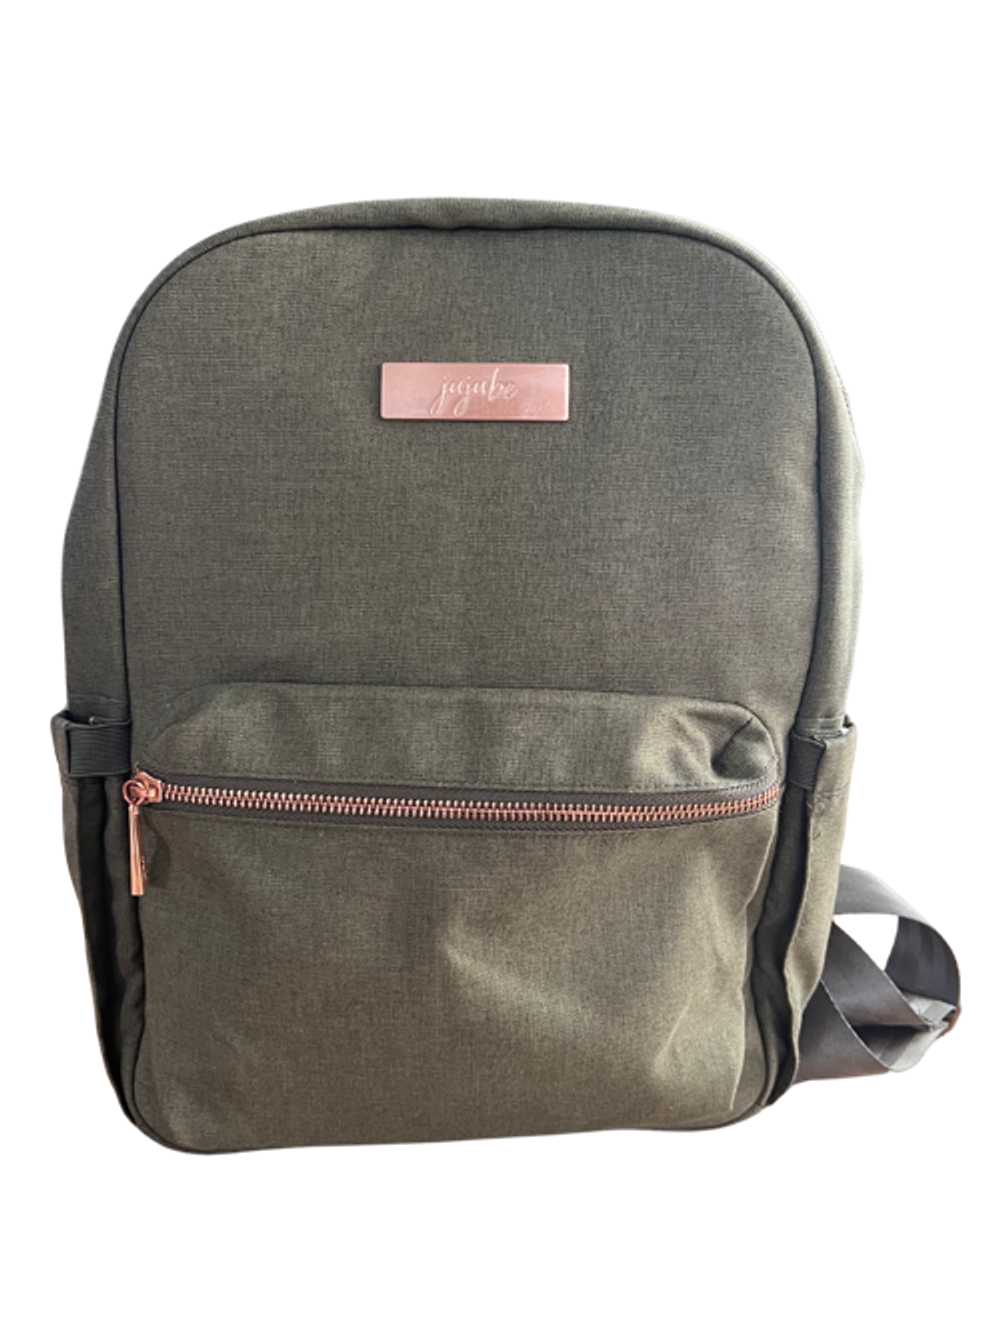 JuJuBe Midi Backpack - Olive Chromatics - image 4